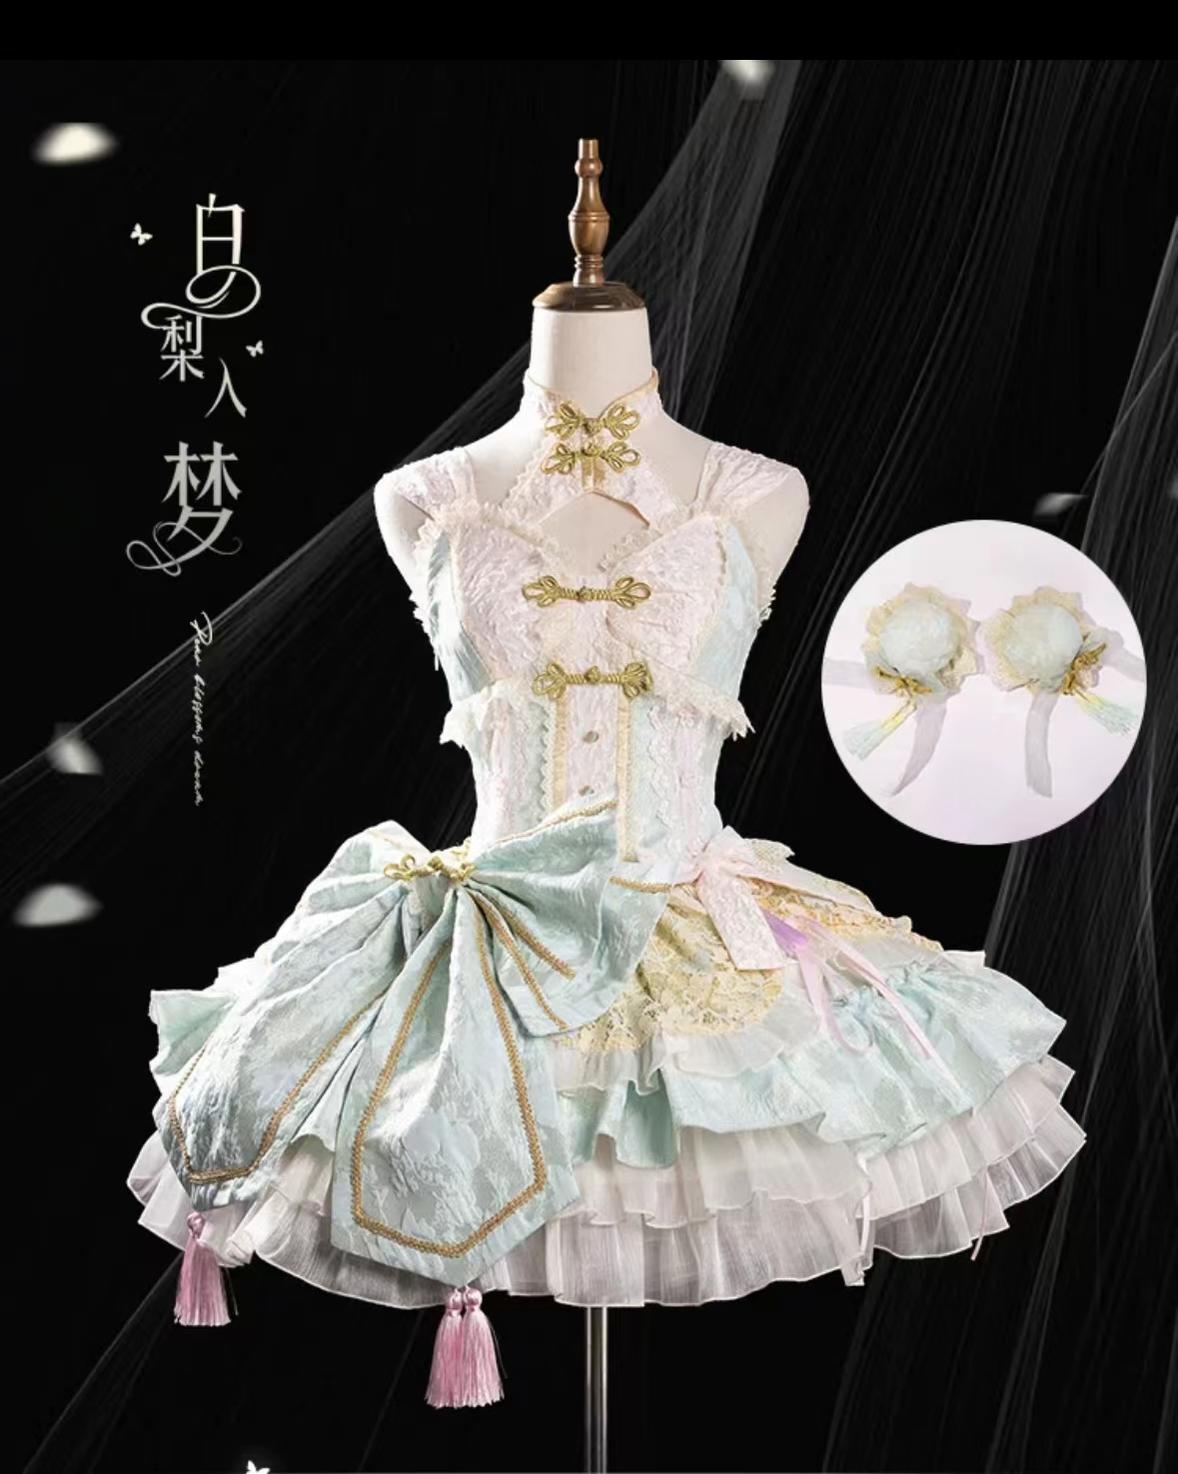 Mewroco~White Pear Dream~Han Lolita JSK Dress Halter Dress for Summer Wear S Green jsk + hair accessory 